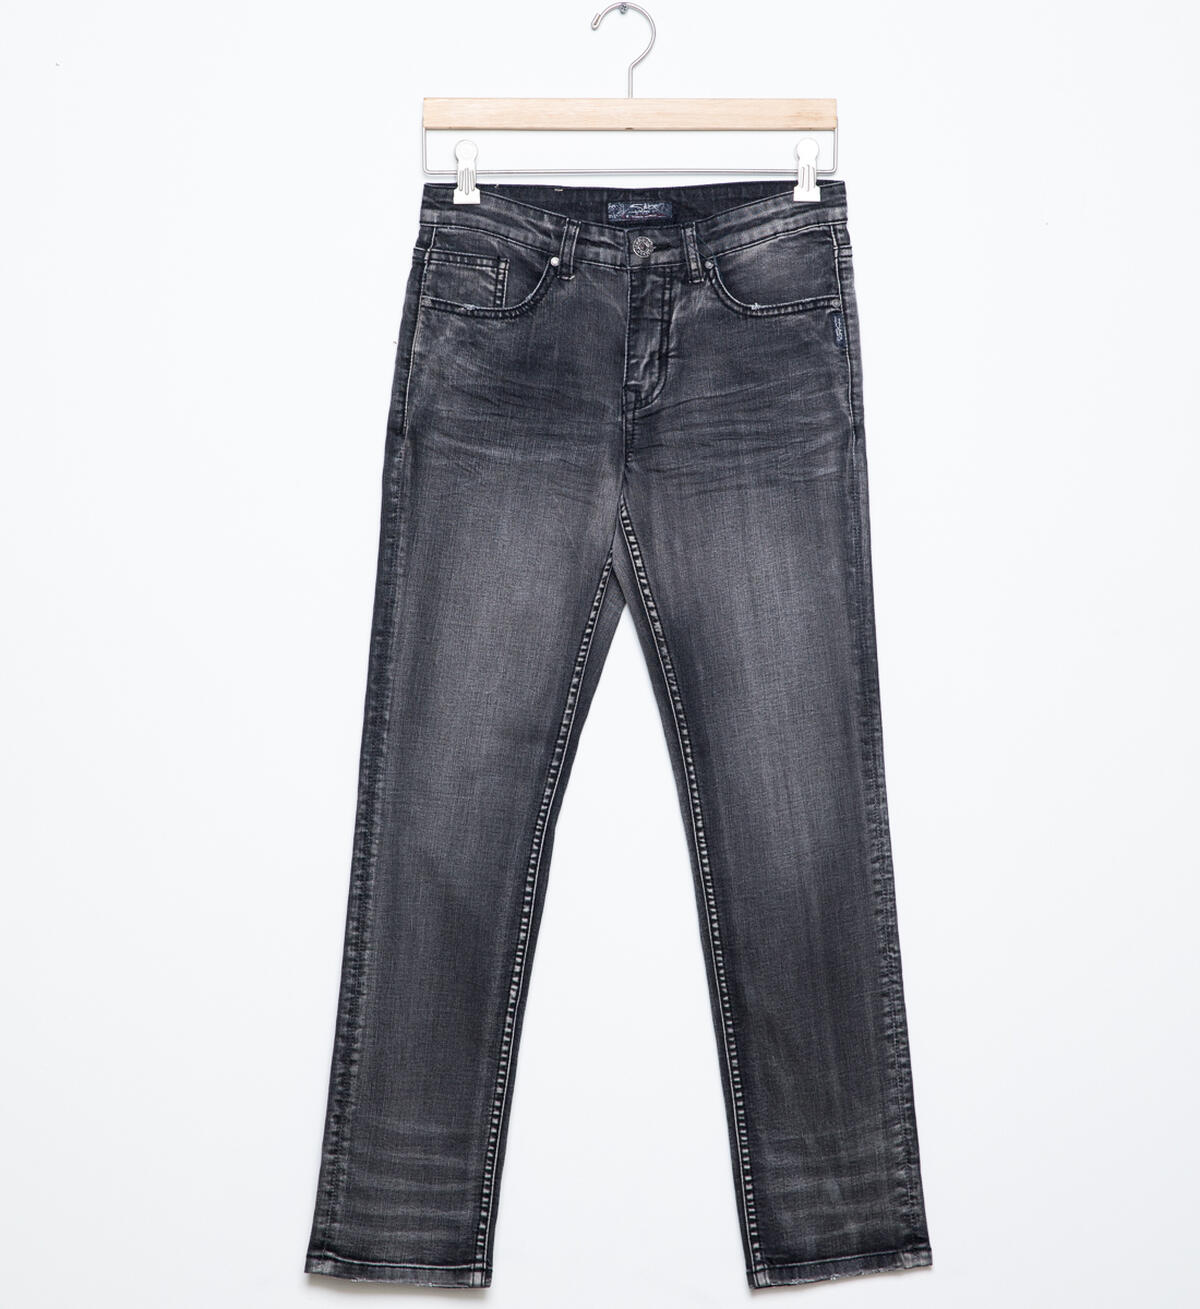 Nathan Skinny Jeans in Grey Wash  (7-16), , hi-res image number 0